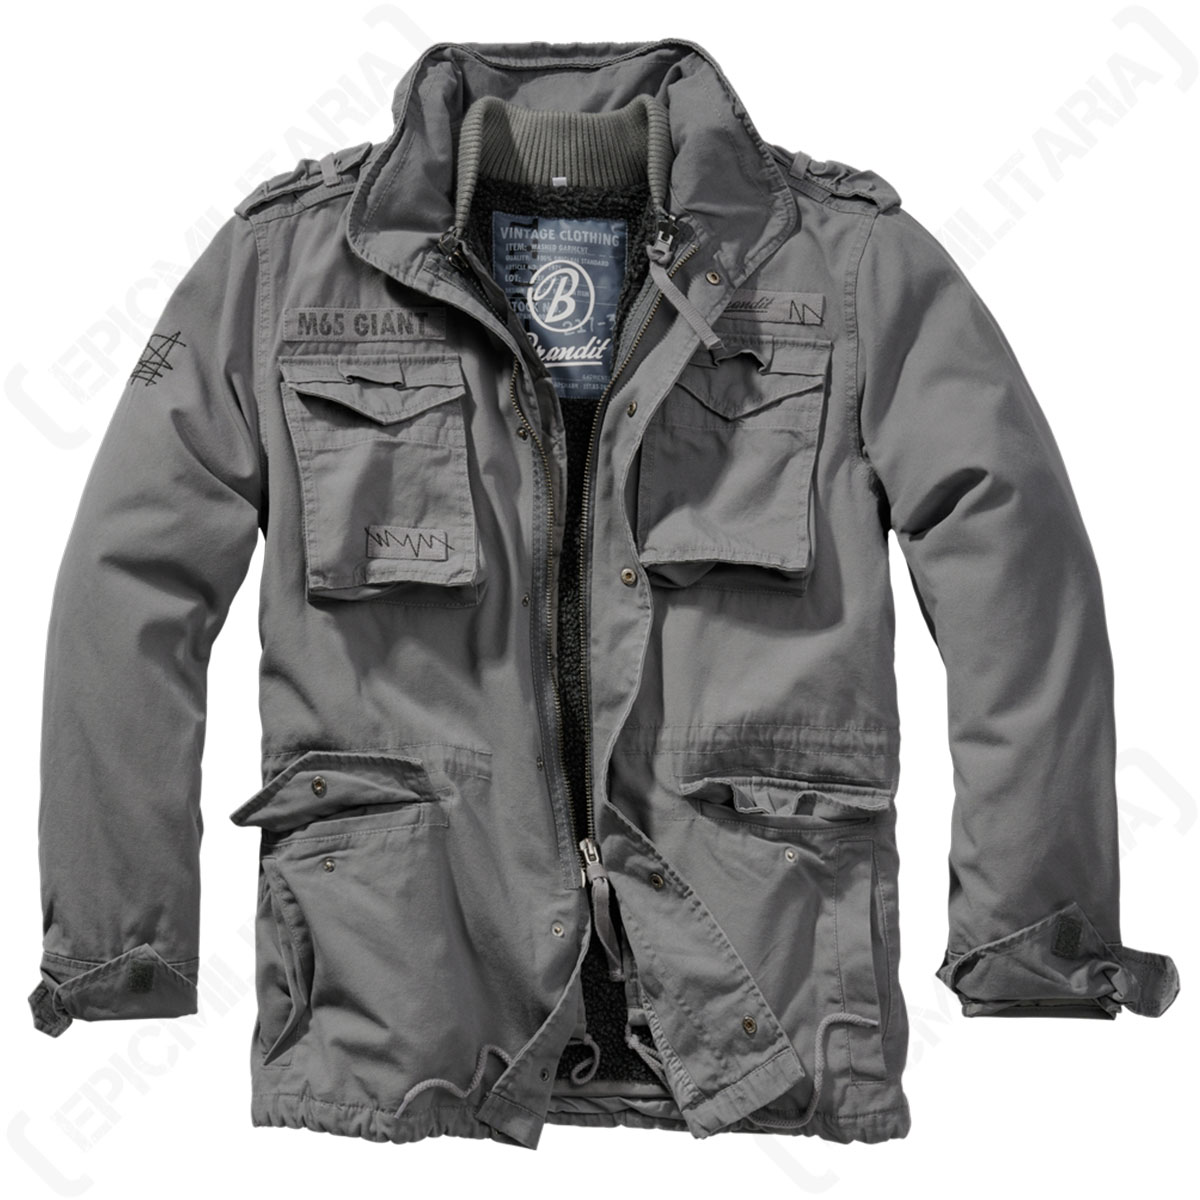 Brandit M65 Giant Jacket - Grey Epic - Militaria Charcoal